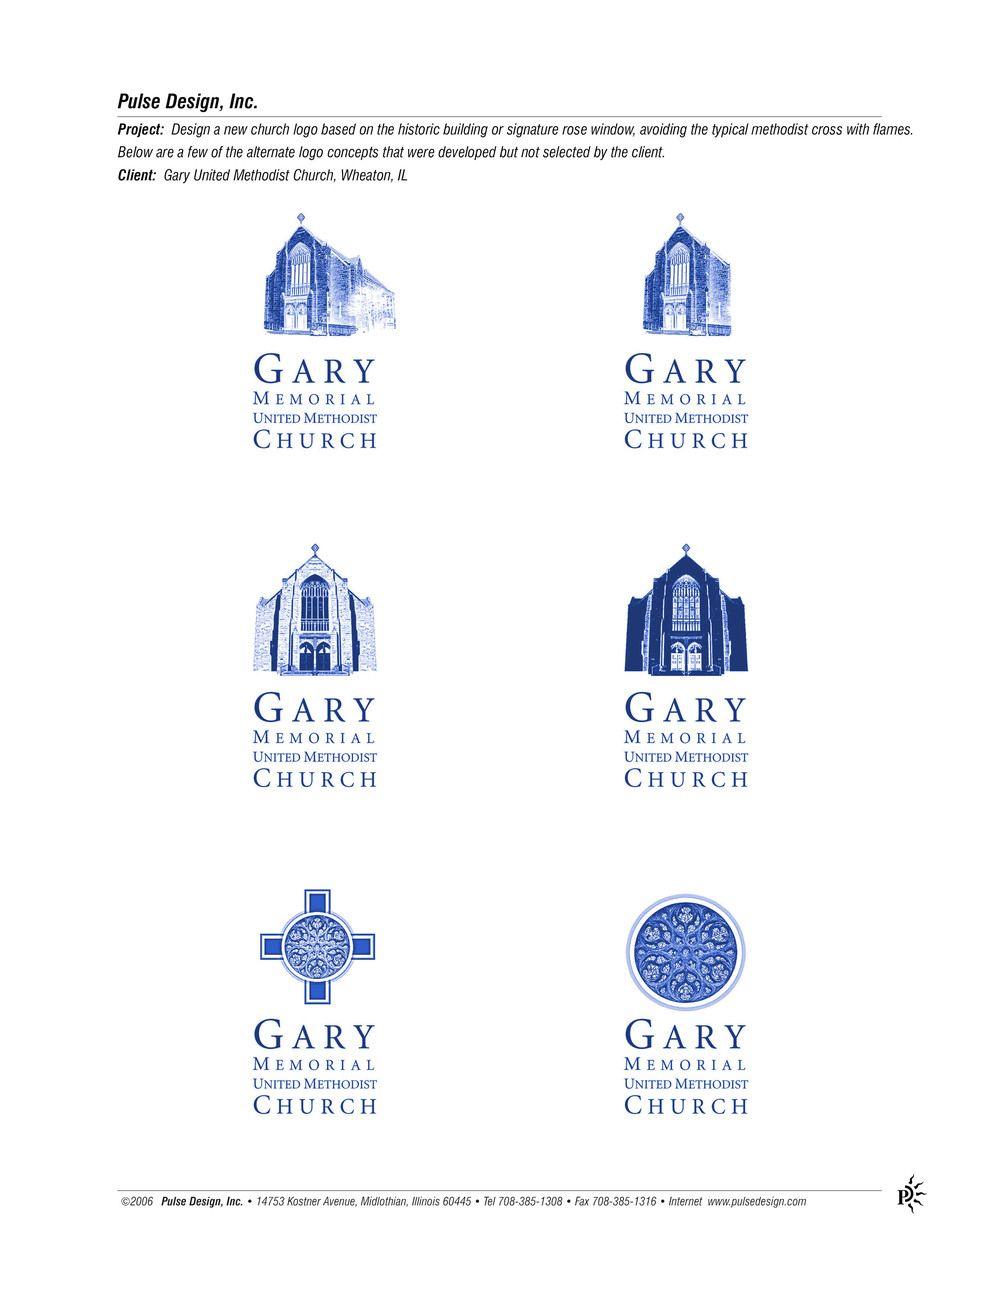 Blue Pulse Logo - Client Gary Church 1 — Pulse Design